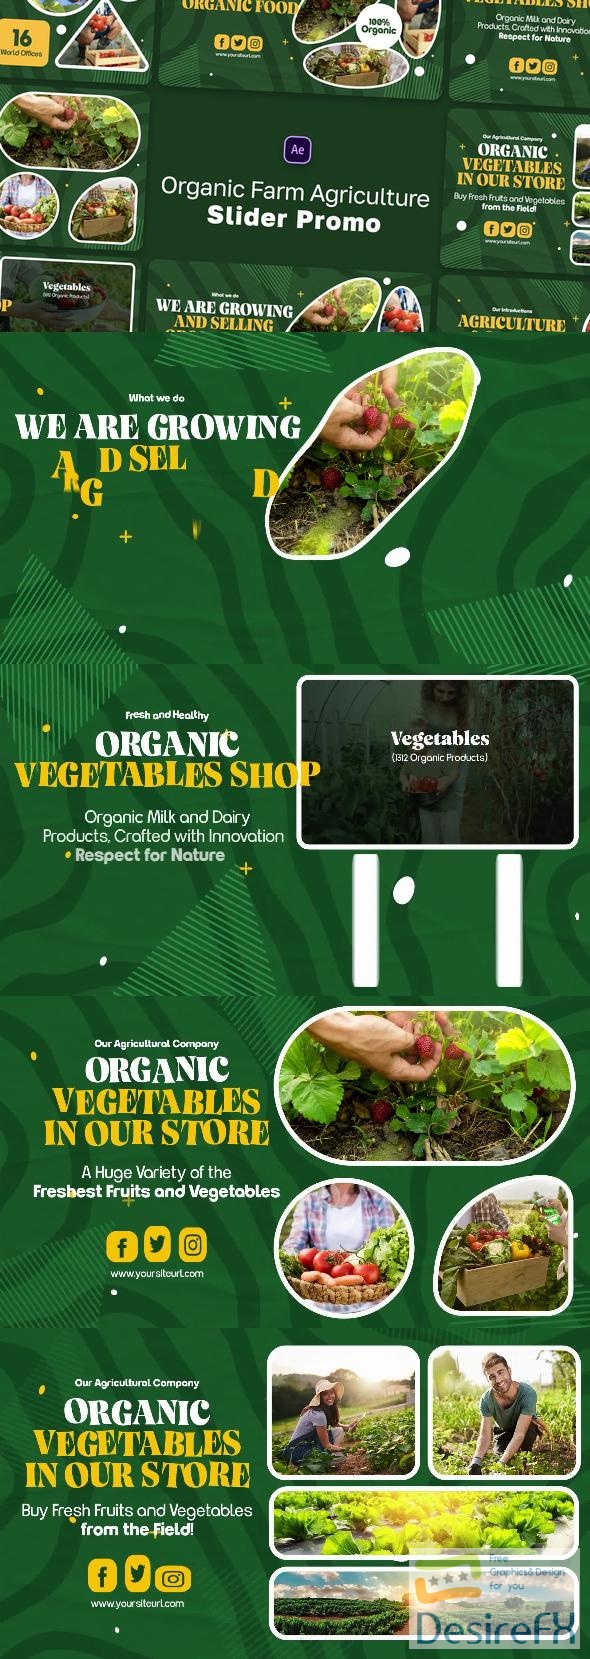 VideoHive Organic Farm Agriculture Slider Promo 46116783